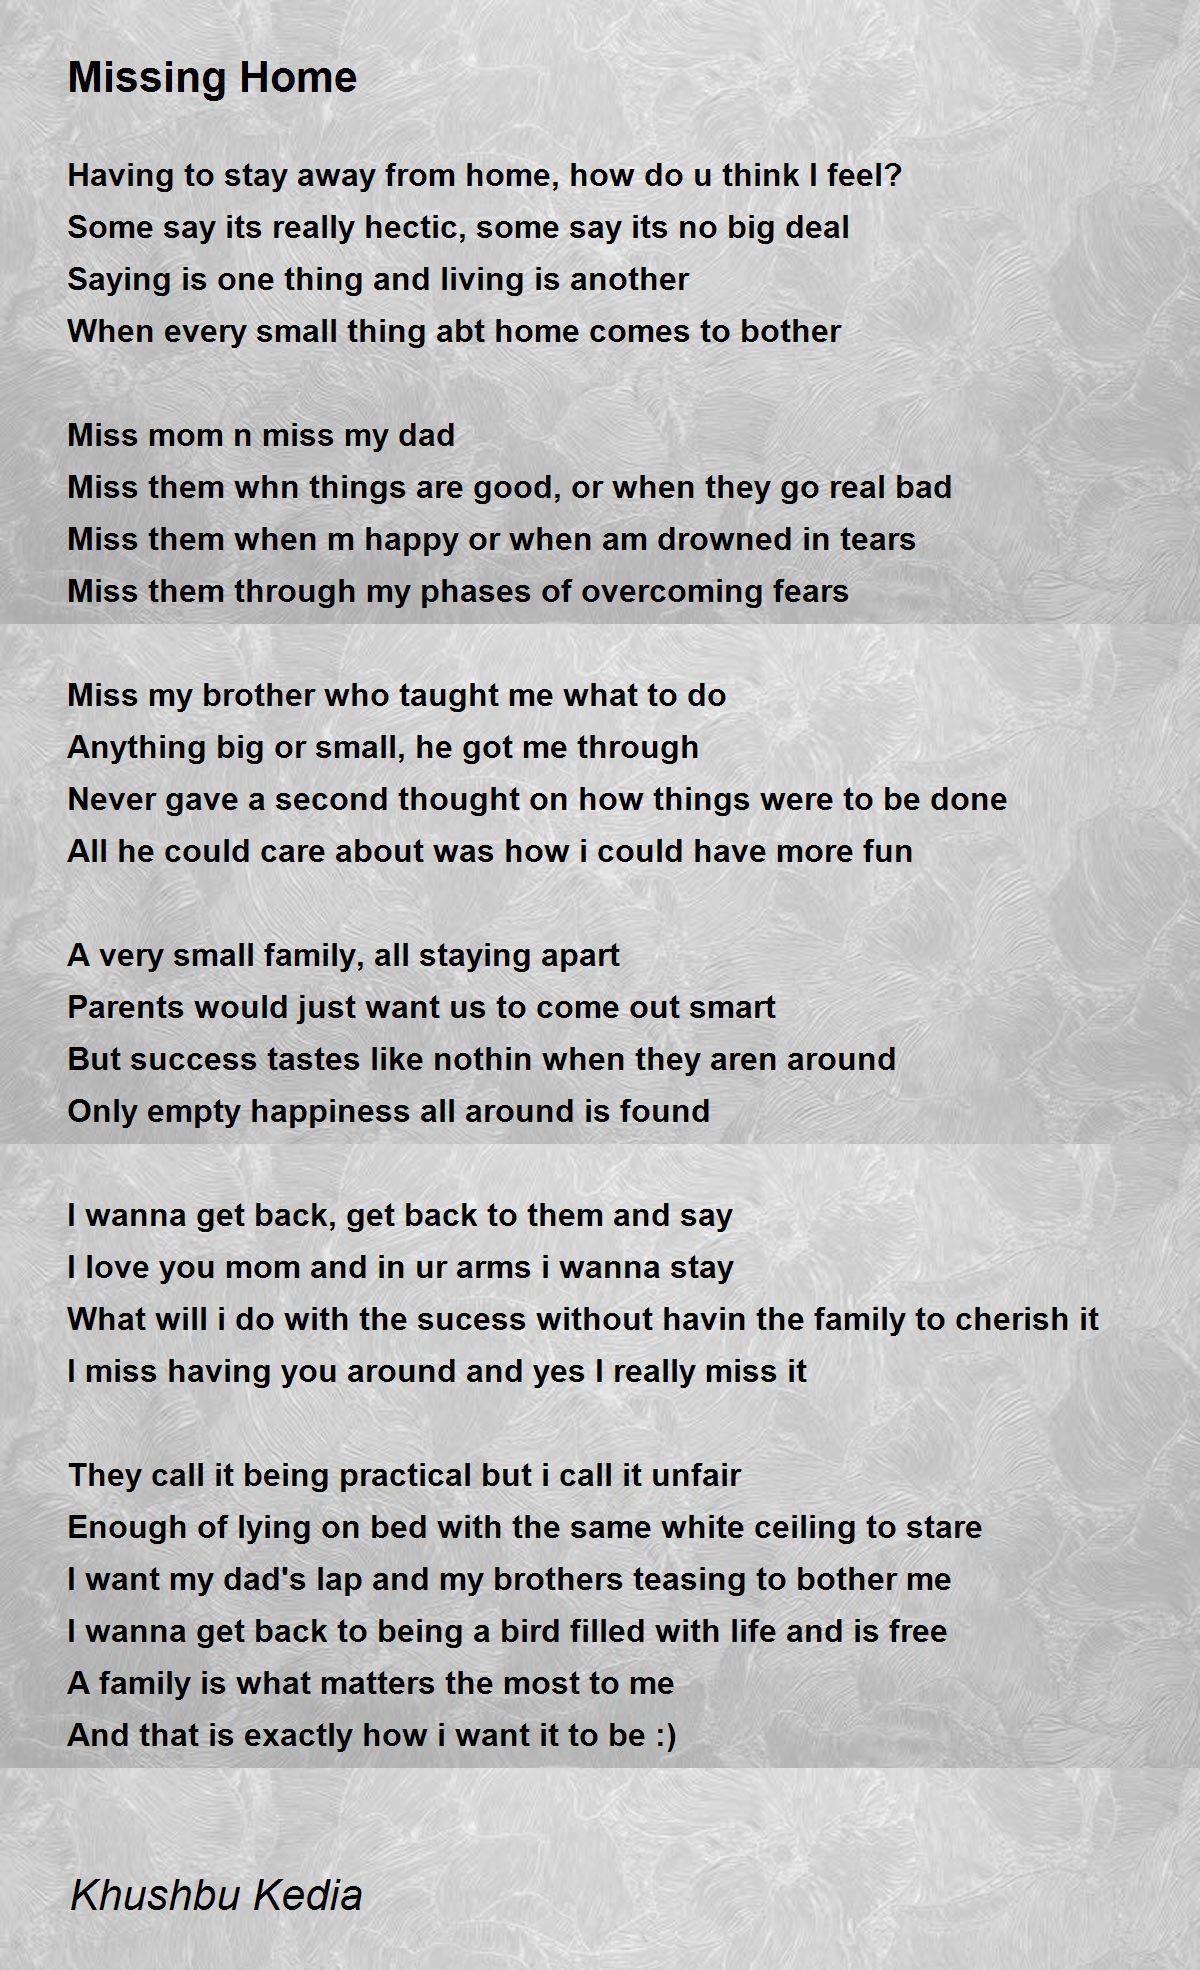 Missing Home Poem By Khushbu Kedia